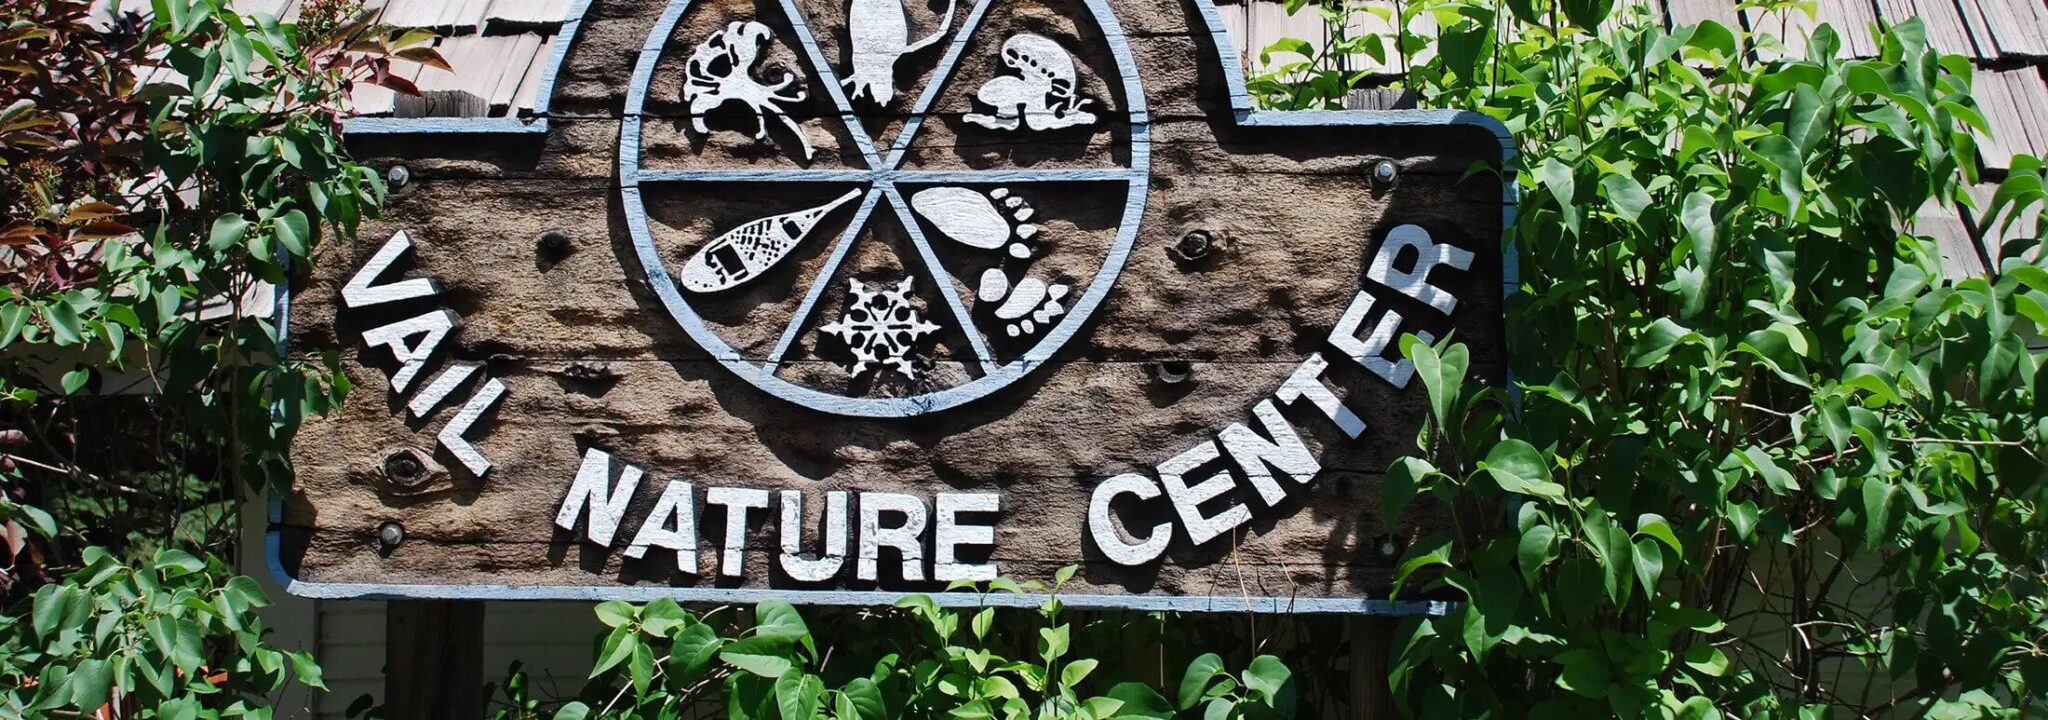 vail-nature-center